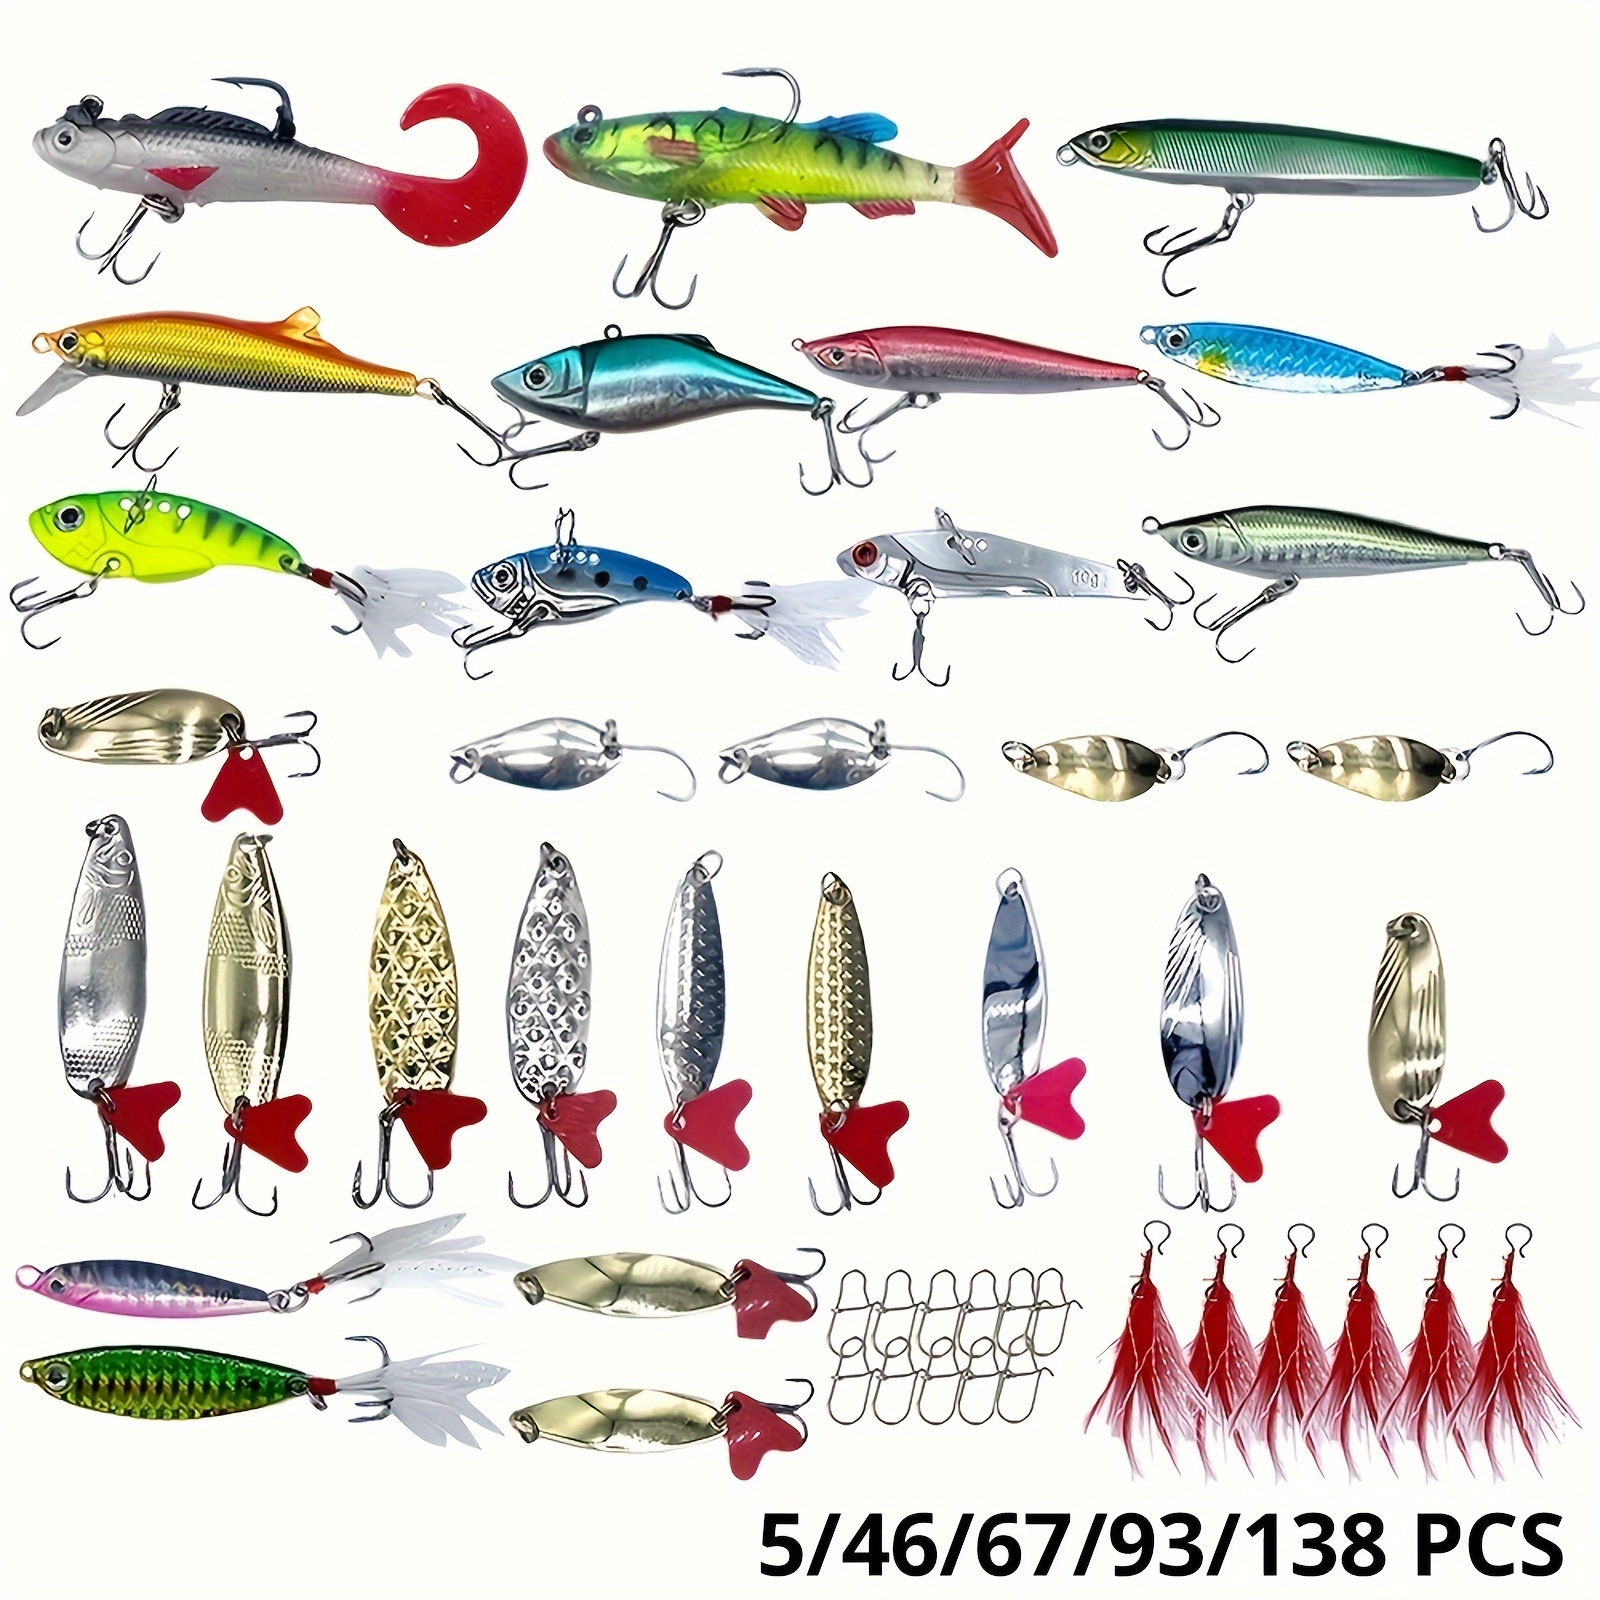 5/46/67/93/138 PCS Fishing Lures Kit, Fishing Equipment, Including Spoon  Lures, Soft Plastic Worms, Crankbait Jigs, Fishing Hooks